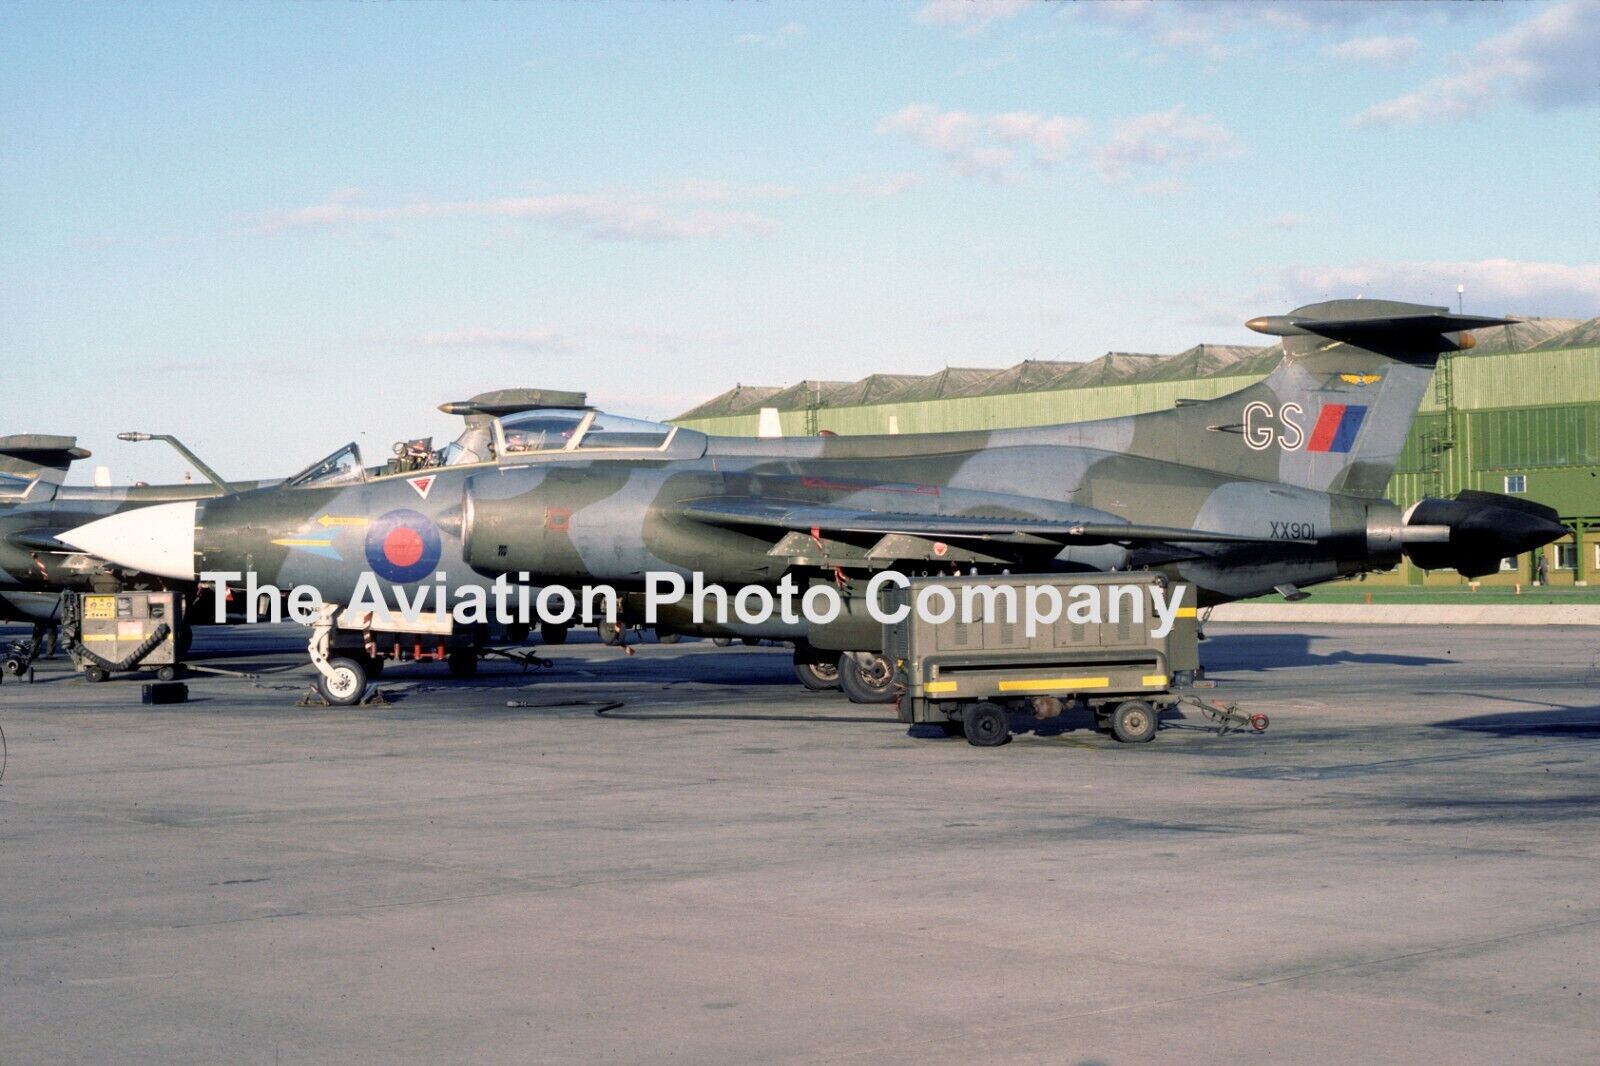 RAF 208 Squadron Blackburn Buccaneer S.2 XX901/GS (1985) Photograph